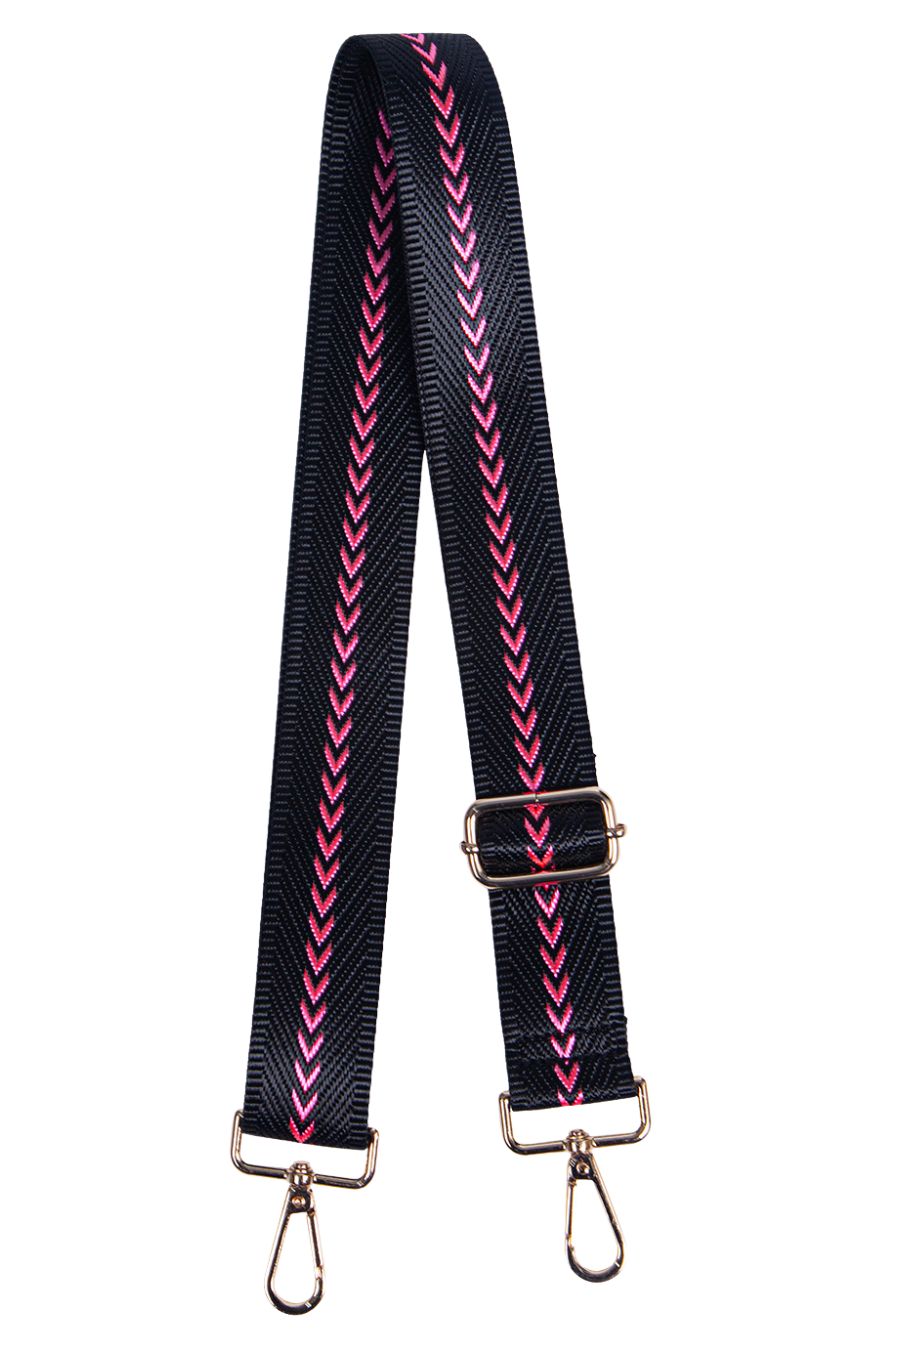 black crossbody bag strap with pink chevron arrow print, adjustable with gold hardware